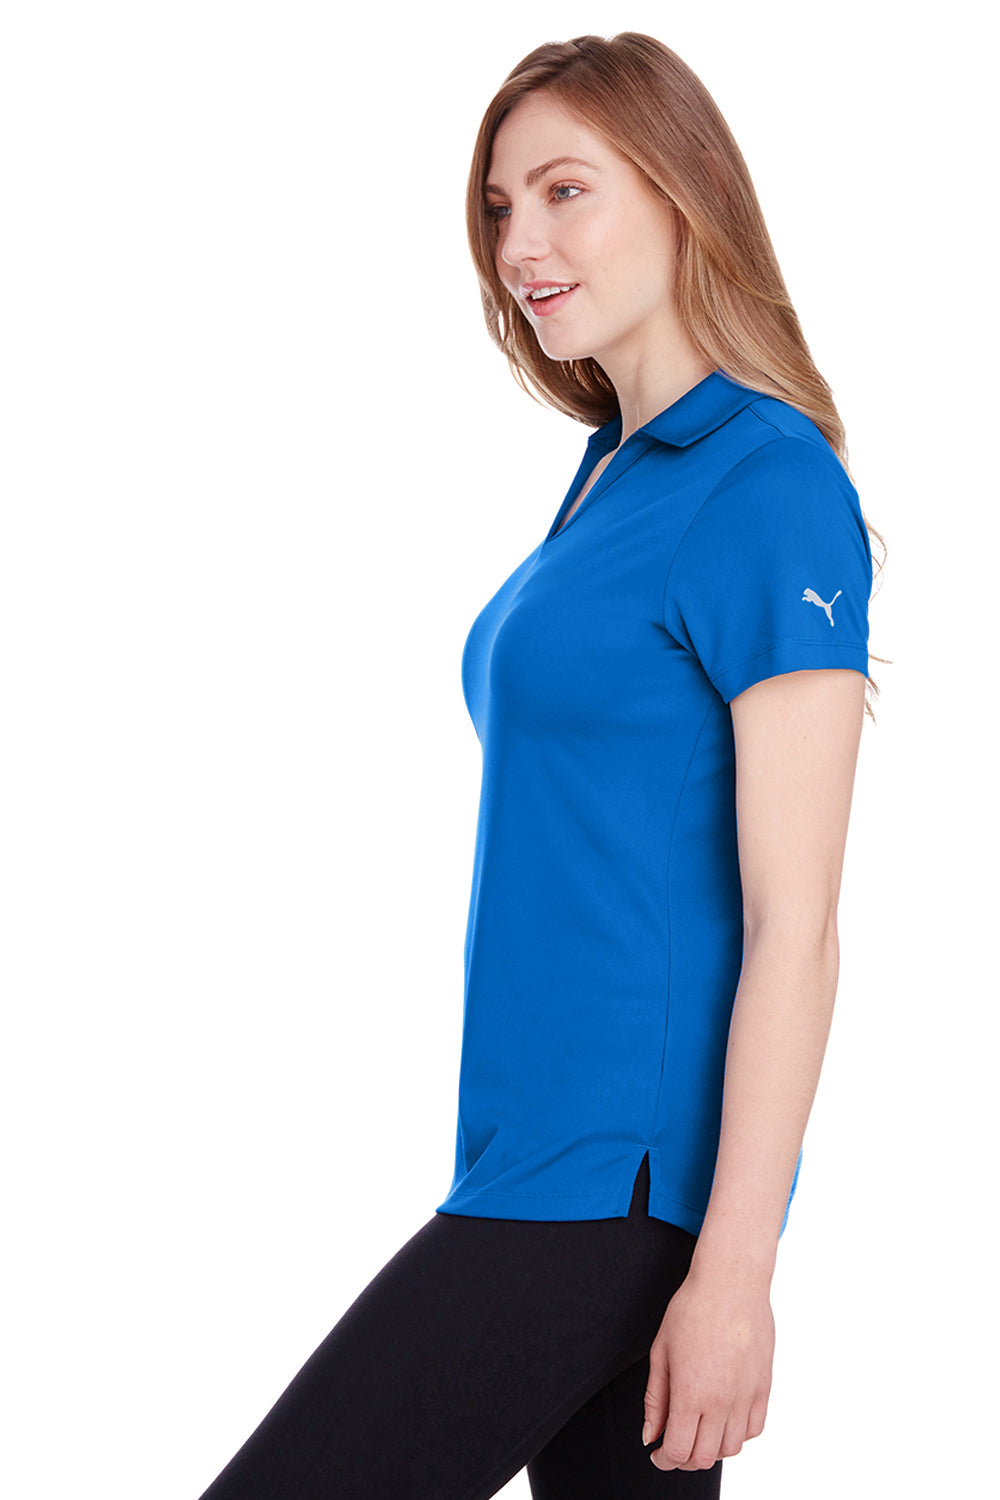 Puma 596800 Womens Icon Performance Moisture Wicking Short Sleeve Polo Shirt Royal Blue Side